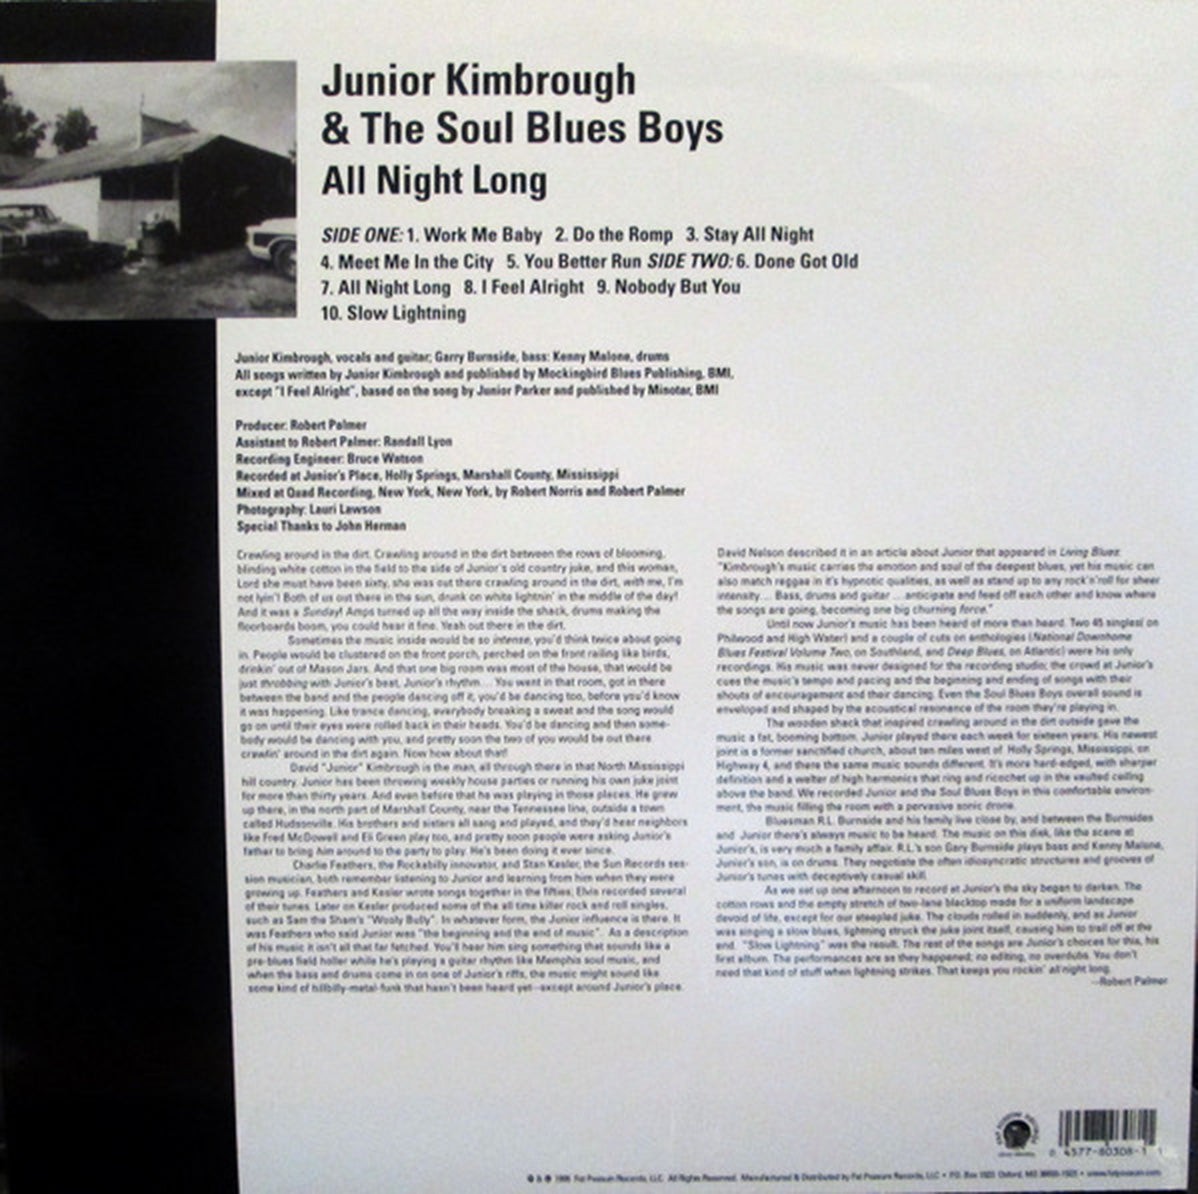 Junior Kimbrough & The Soul Blues Boys – All Night Long